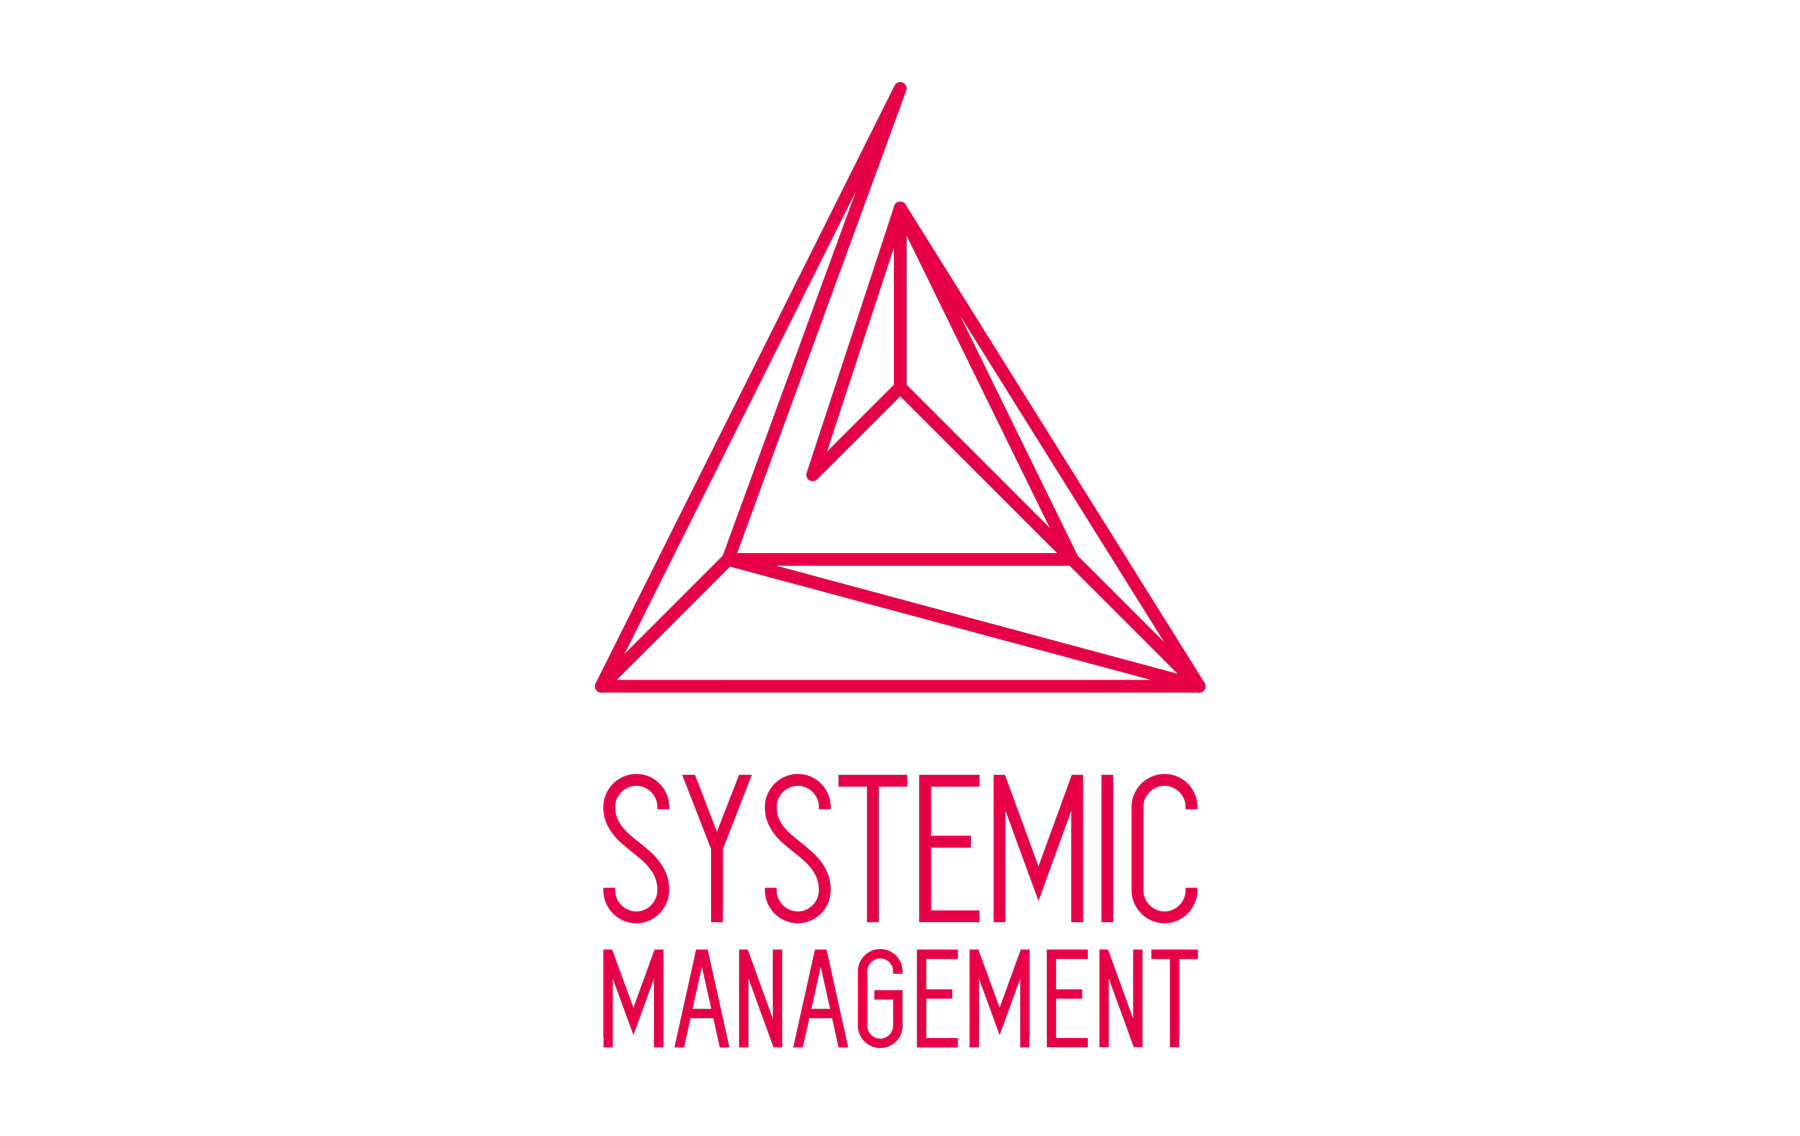 Systemic Management © 2016 Joana Regojo (www.joanaregojo.com)